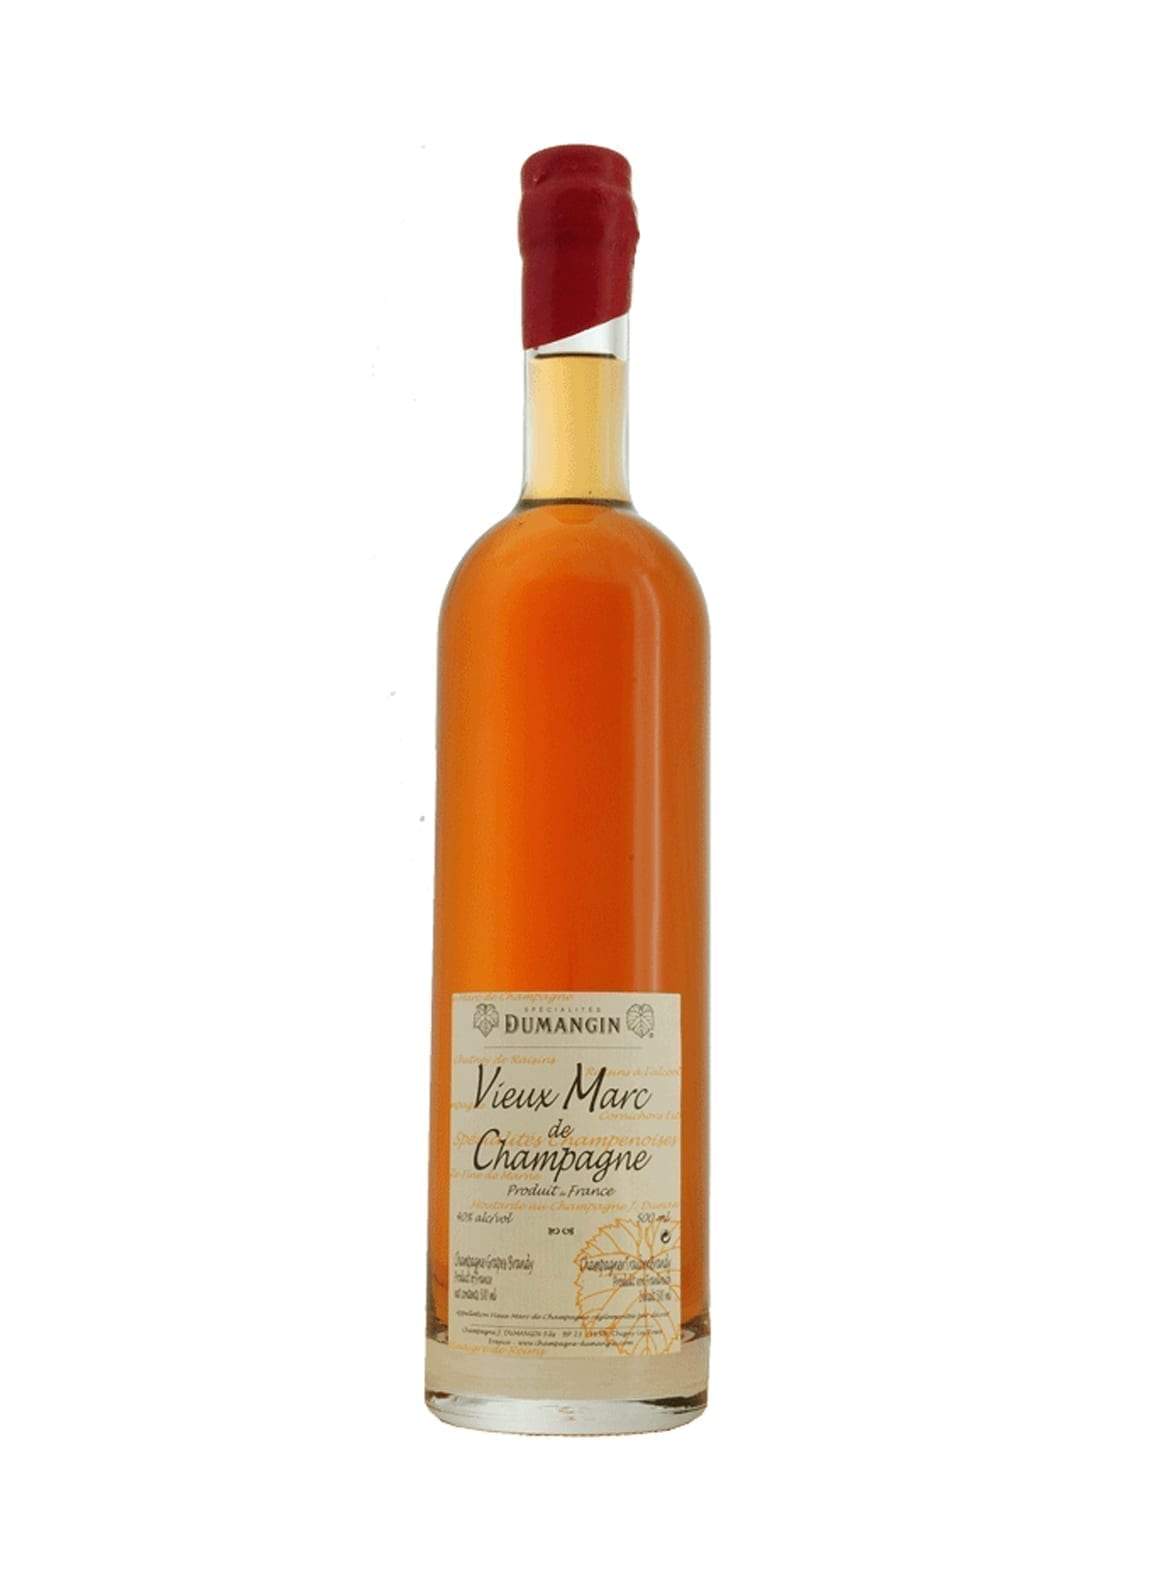 Dumangin Vieux Marc de Champagne 6 years 40% 700ml | Liquor & Spirits | Shop online at Spirits of France